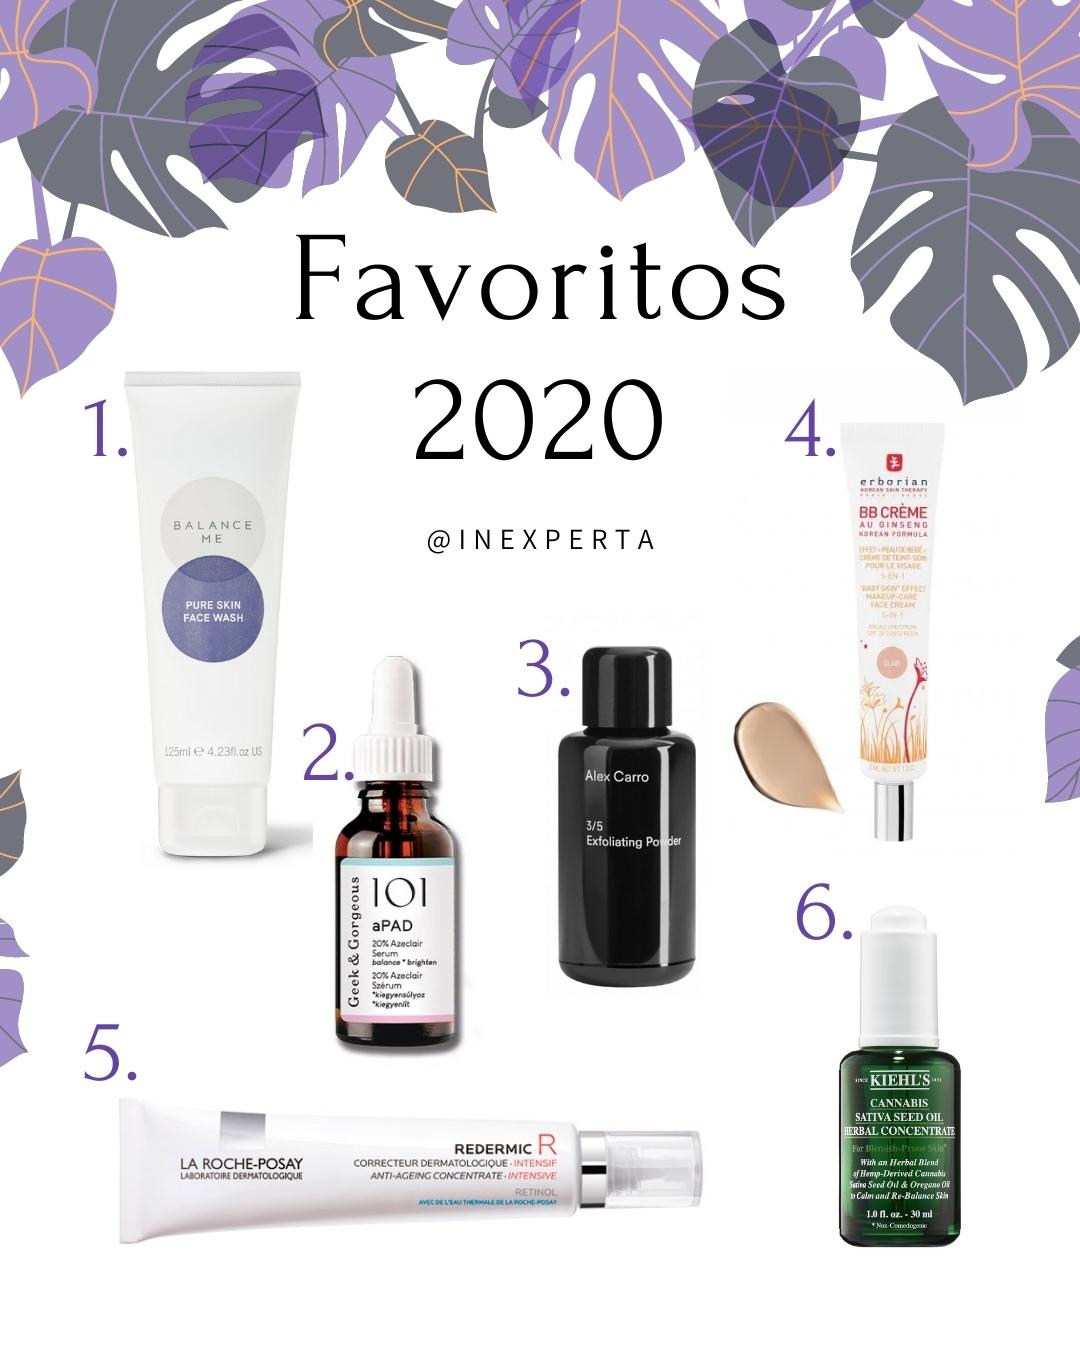 Productos favoritos skincare cuidado facial 2020 inexperta